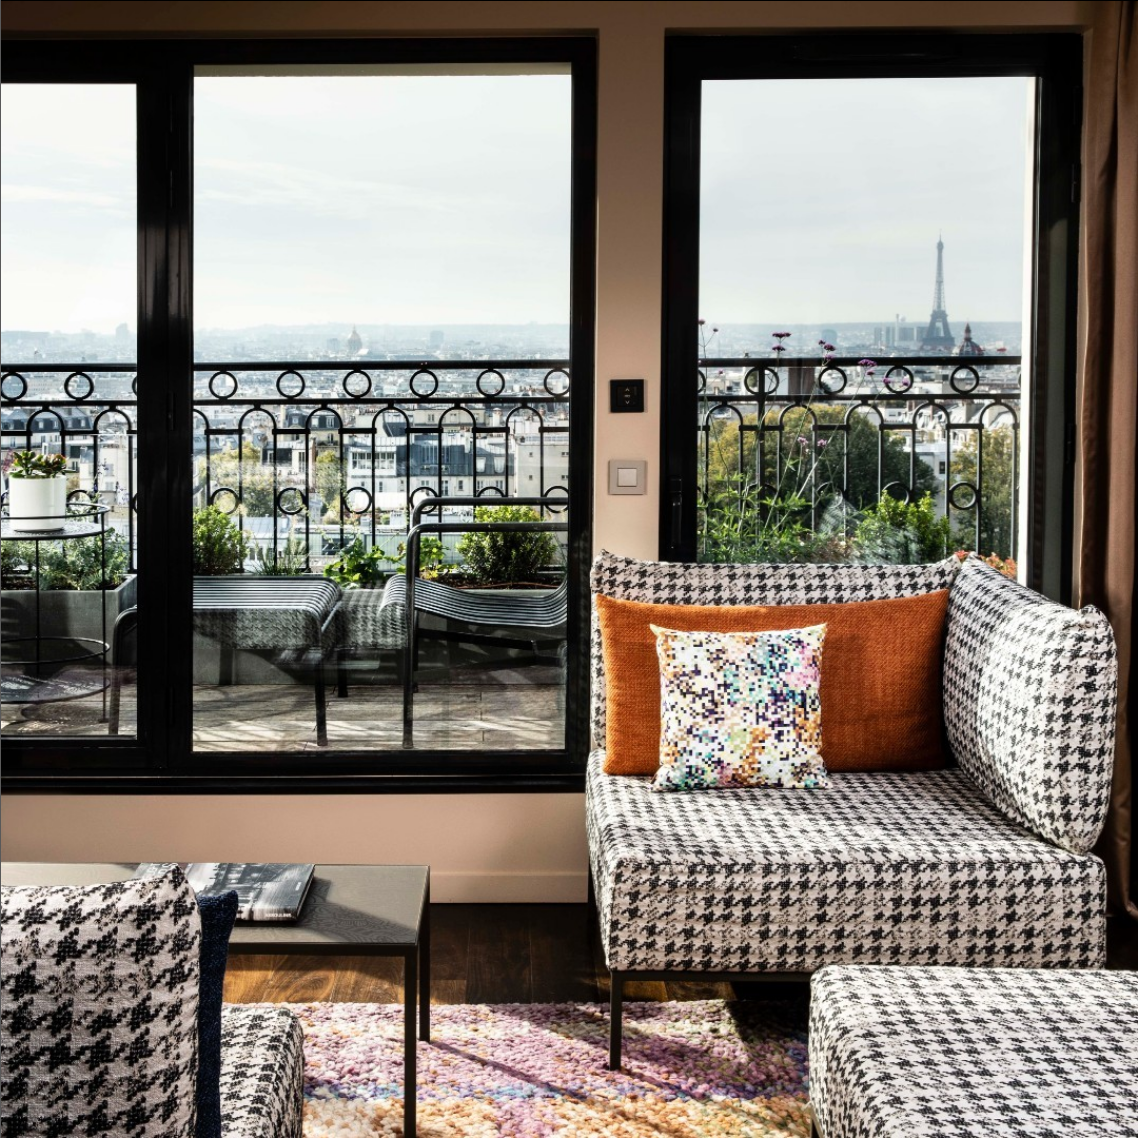 montmartre hotel in paris with rooftop terrace